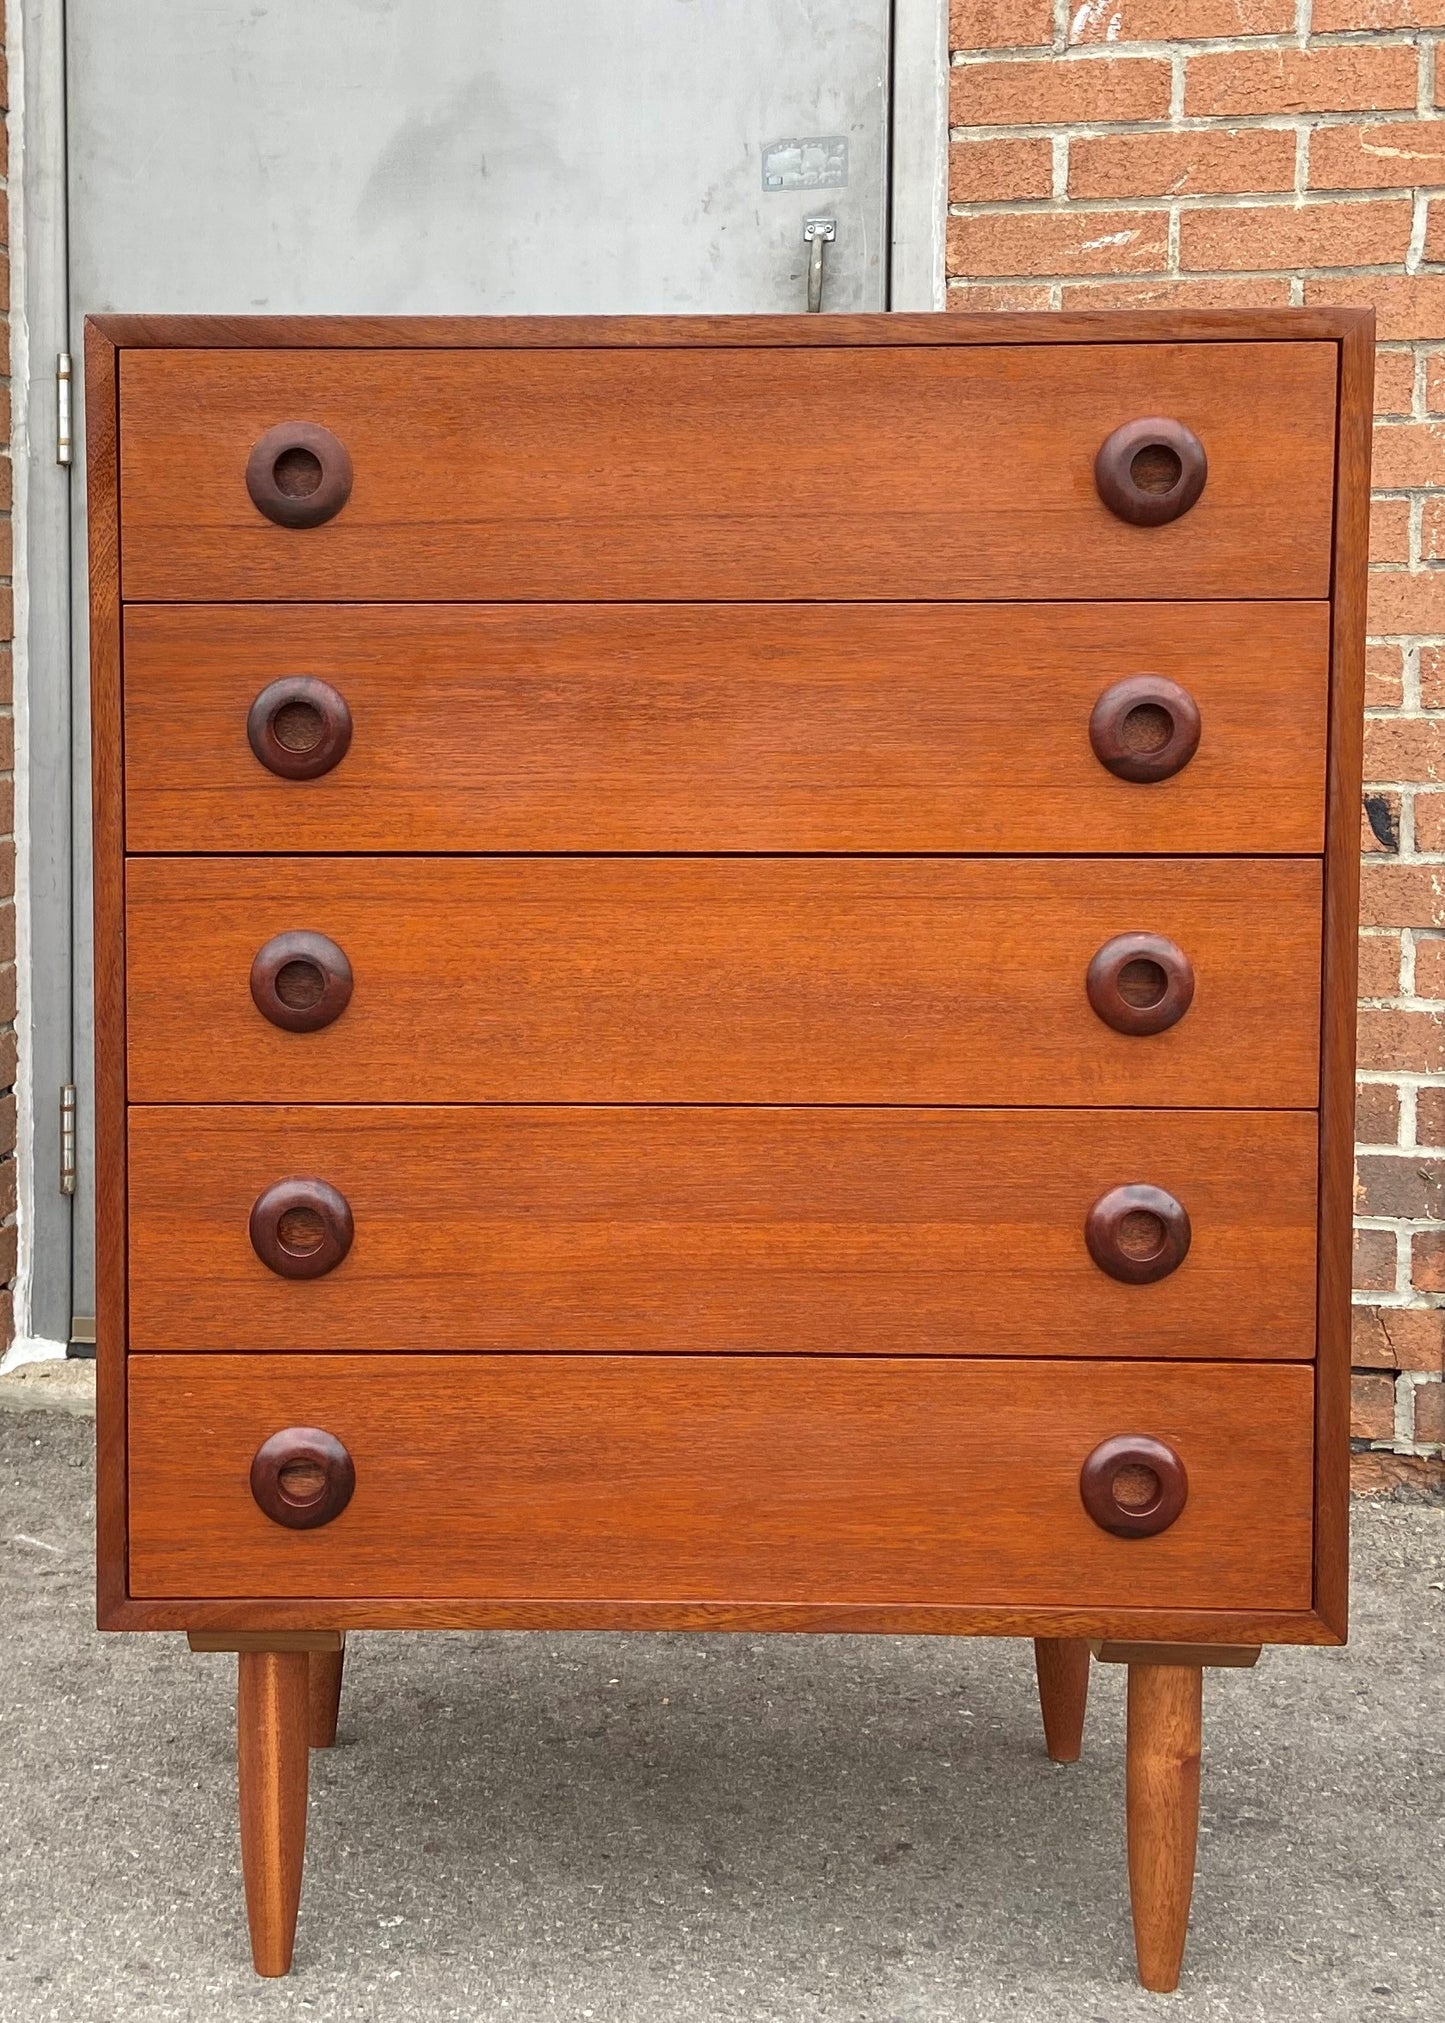 REFINISHED Swedish Mid Century Modern Teak Tallboy Dresser 5 drawers